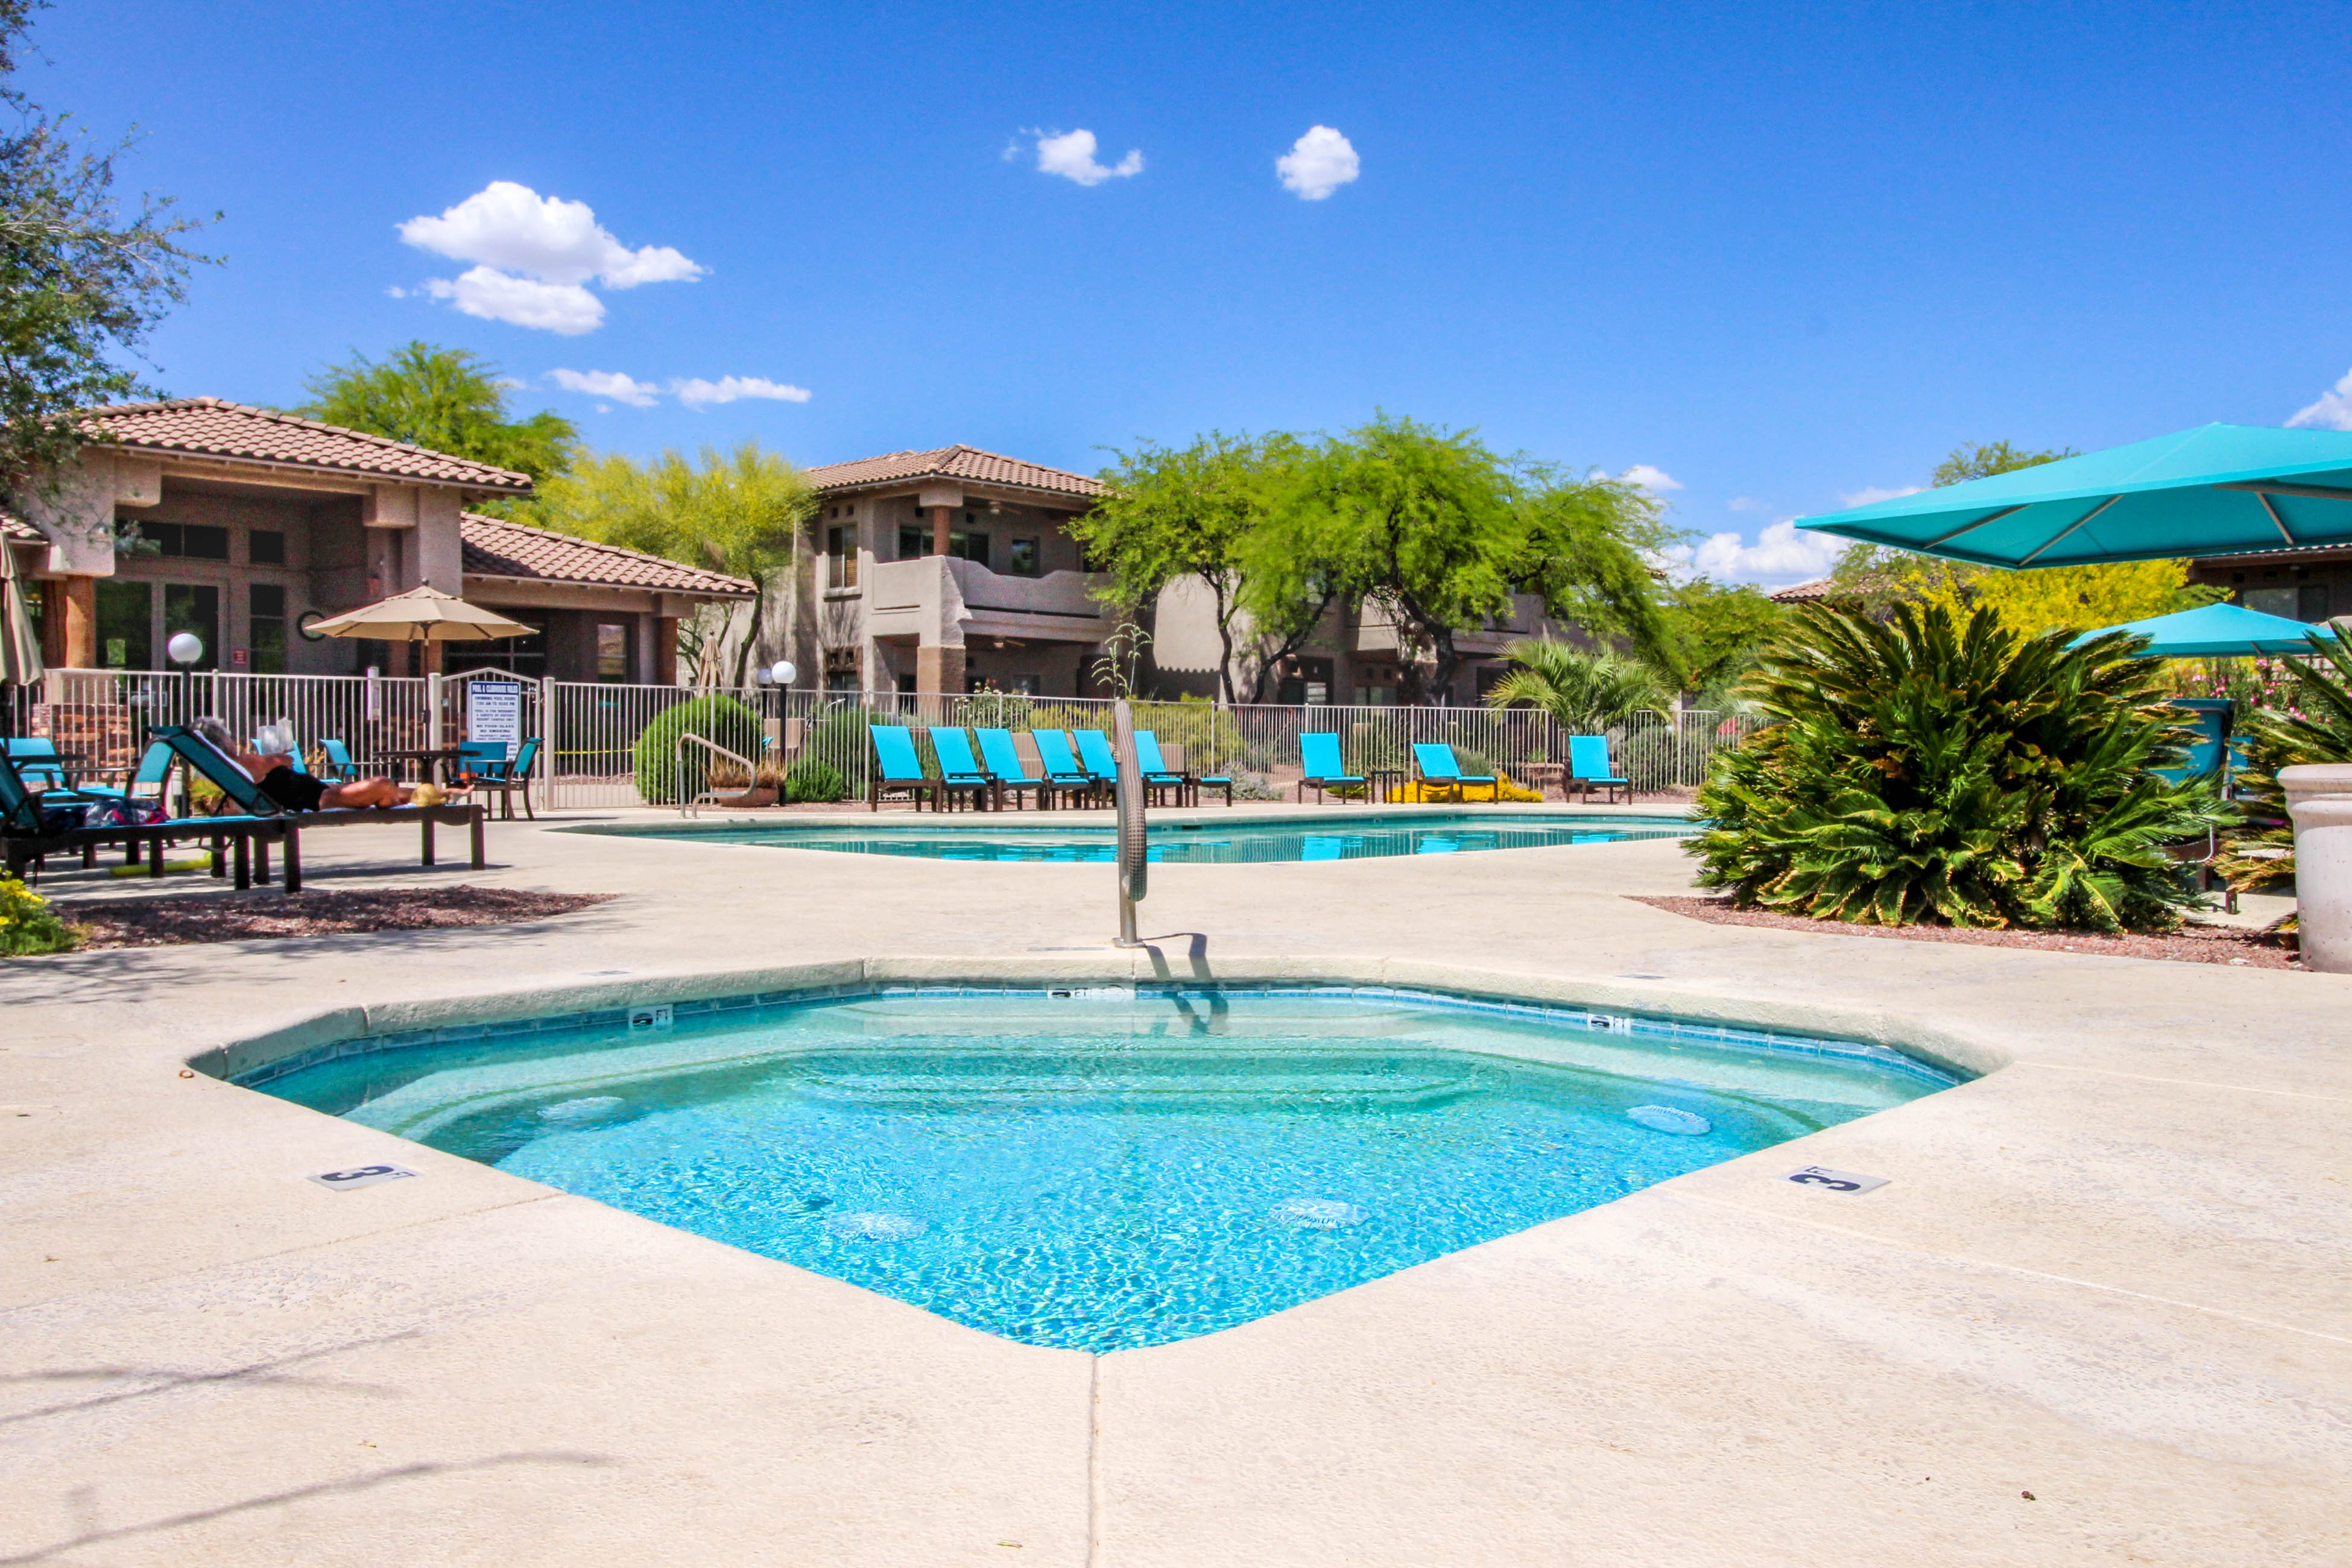 Vistoso Resort Casita #102 | 2 BD Oro Valley, AZ Vacation Rental | Vacasa